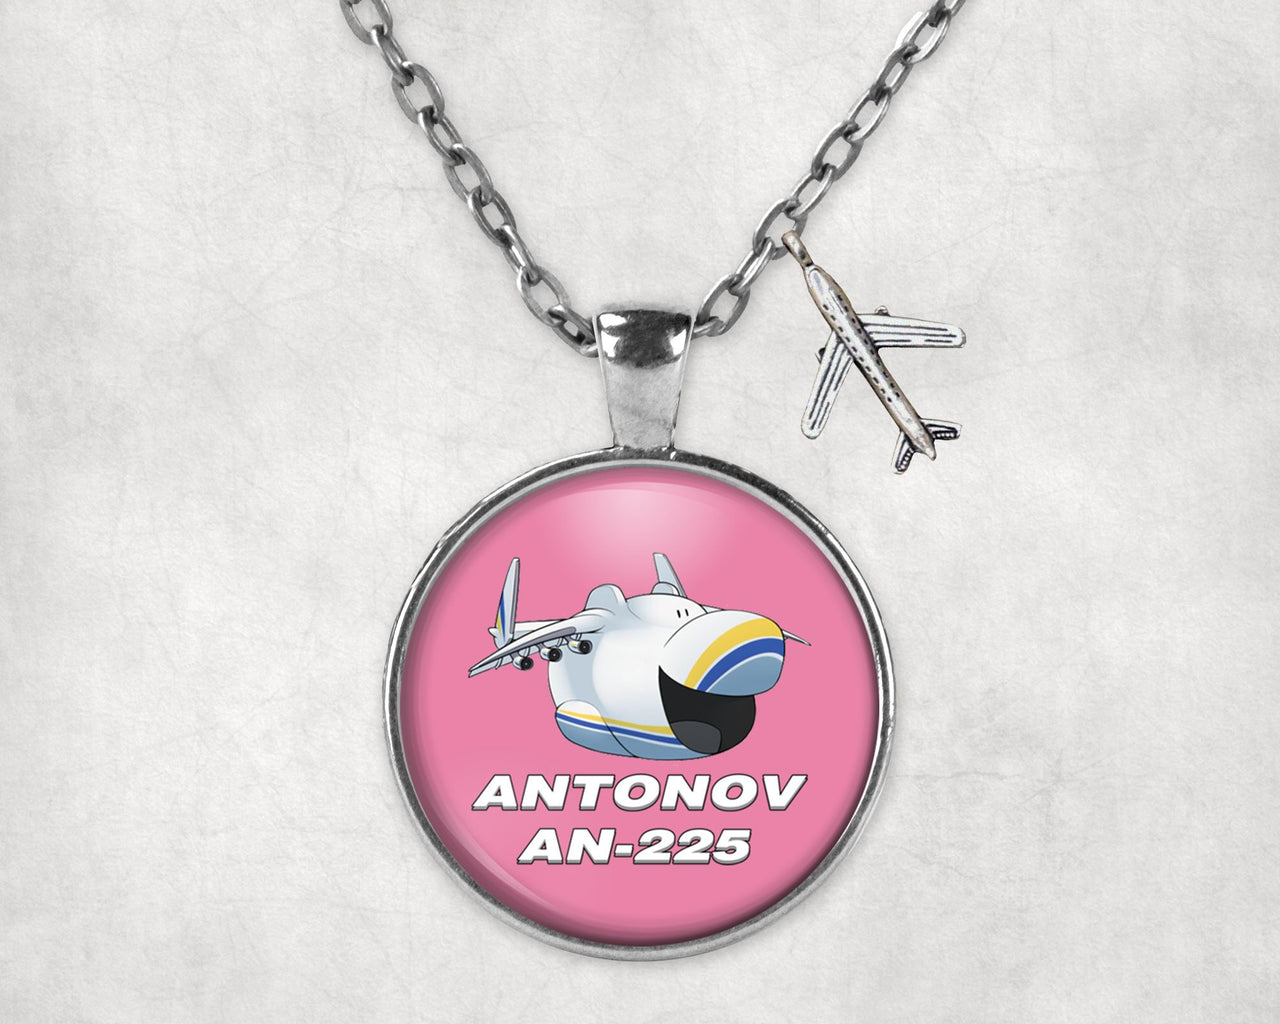 Antonov AN-225 (23) Designed Necklaces